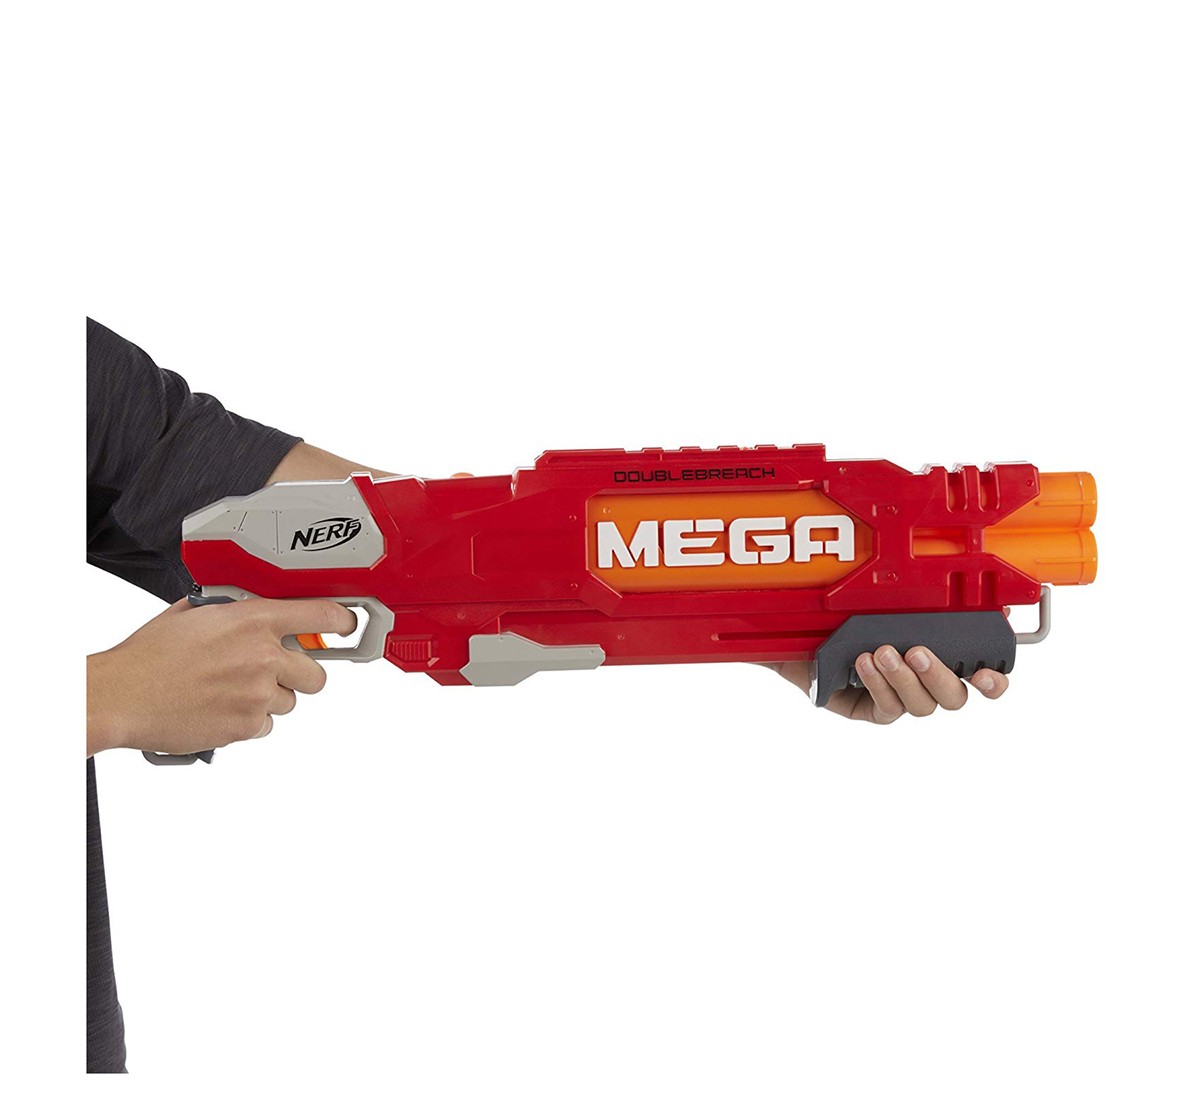 Nerf Mega Doublebreach Blaster -- Breech Load, Pump Action -- age 6Y+ 